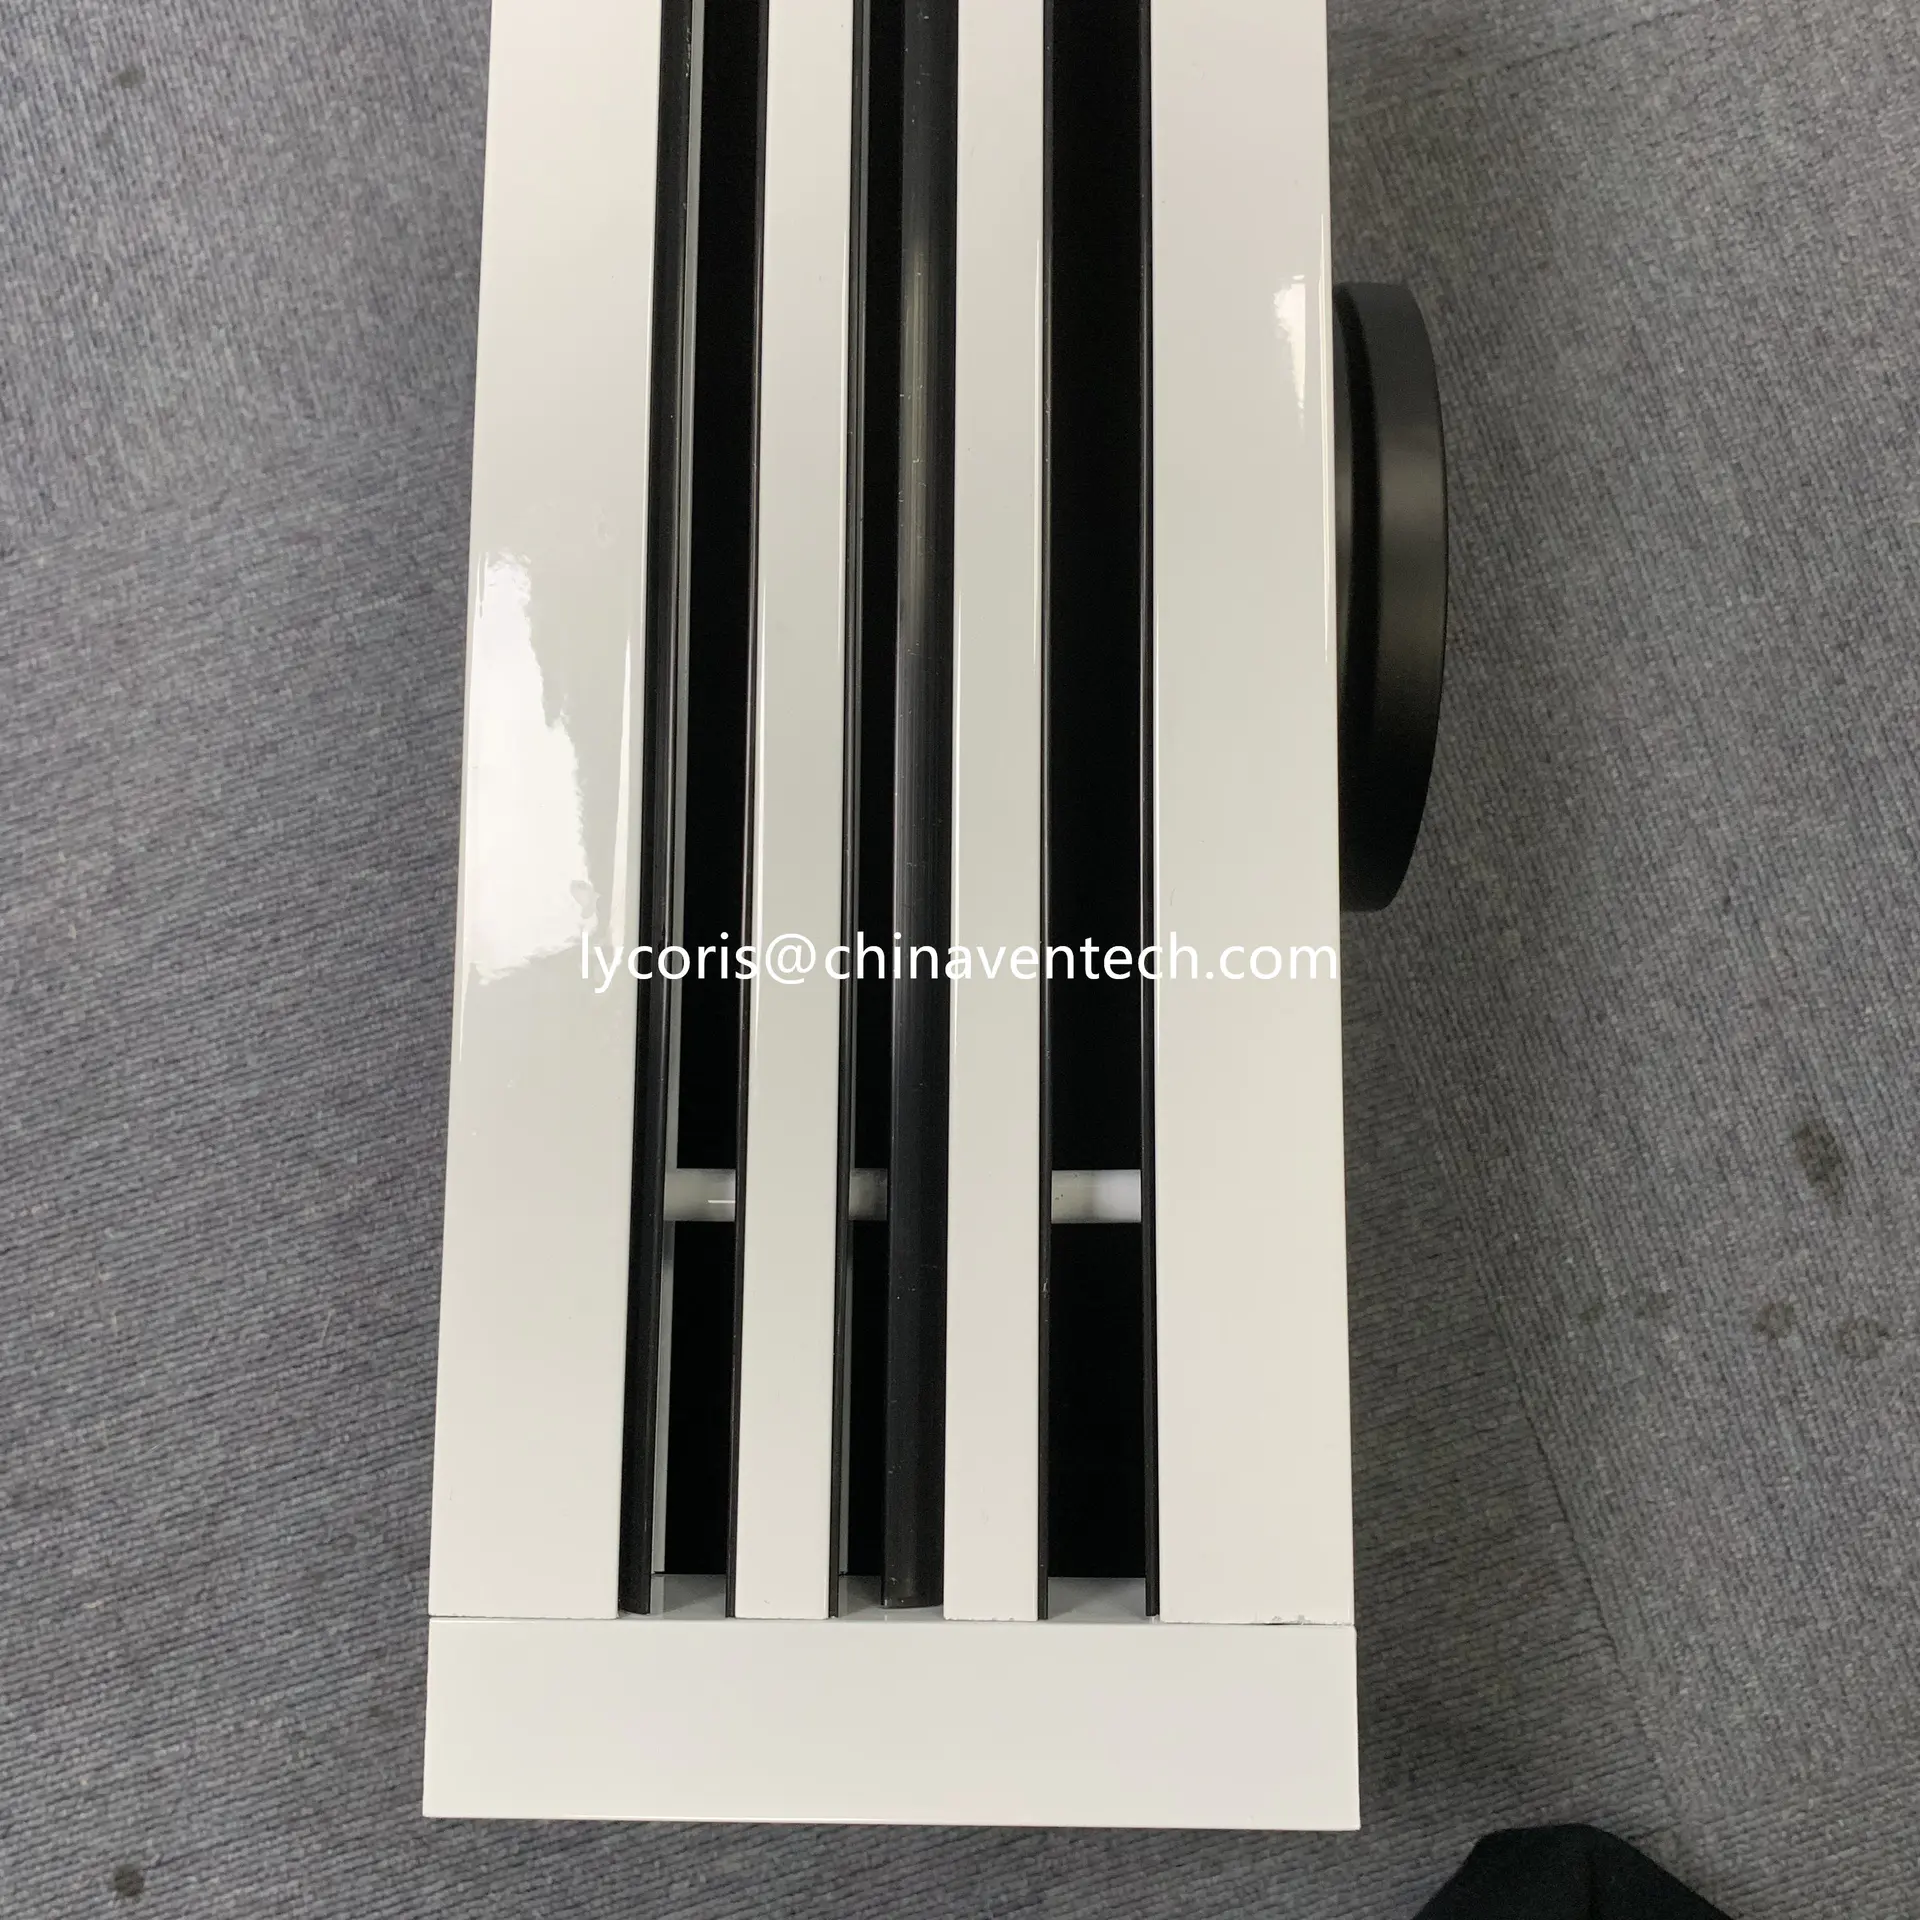 Flexible Ceiling Linear Slot Diffuser Air Aluminum Grille Plenum Box Adaptor Linear Slot Adjustable Blades Diffuser Grille